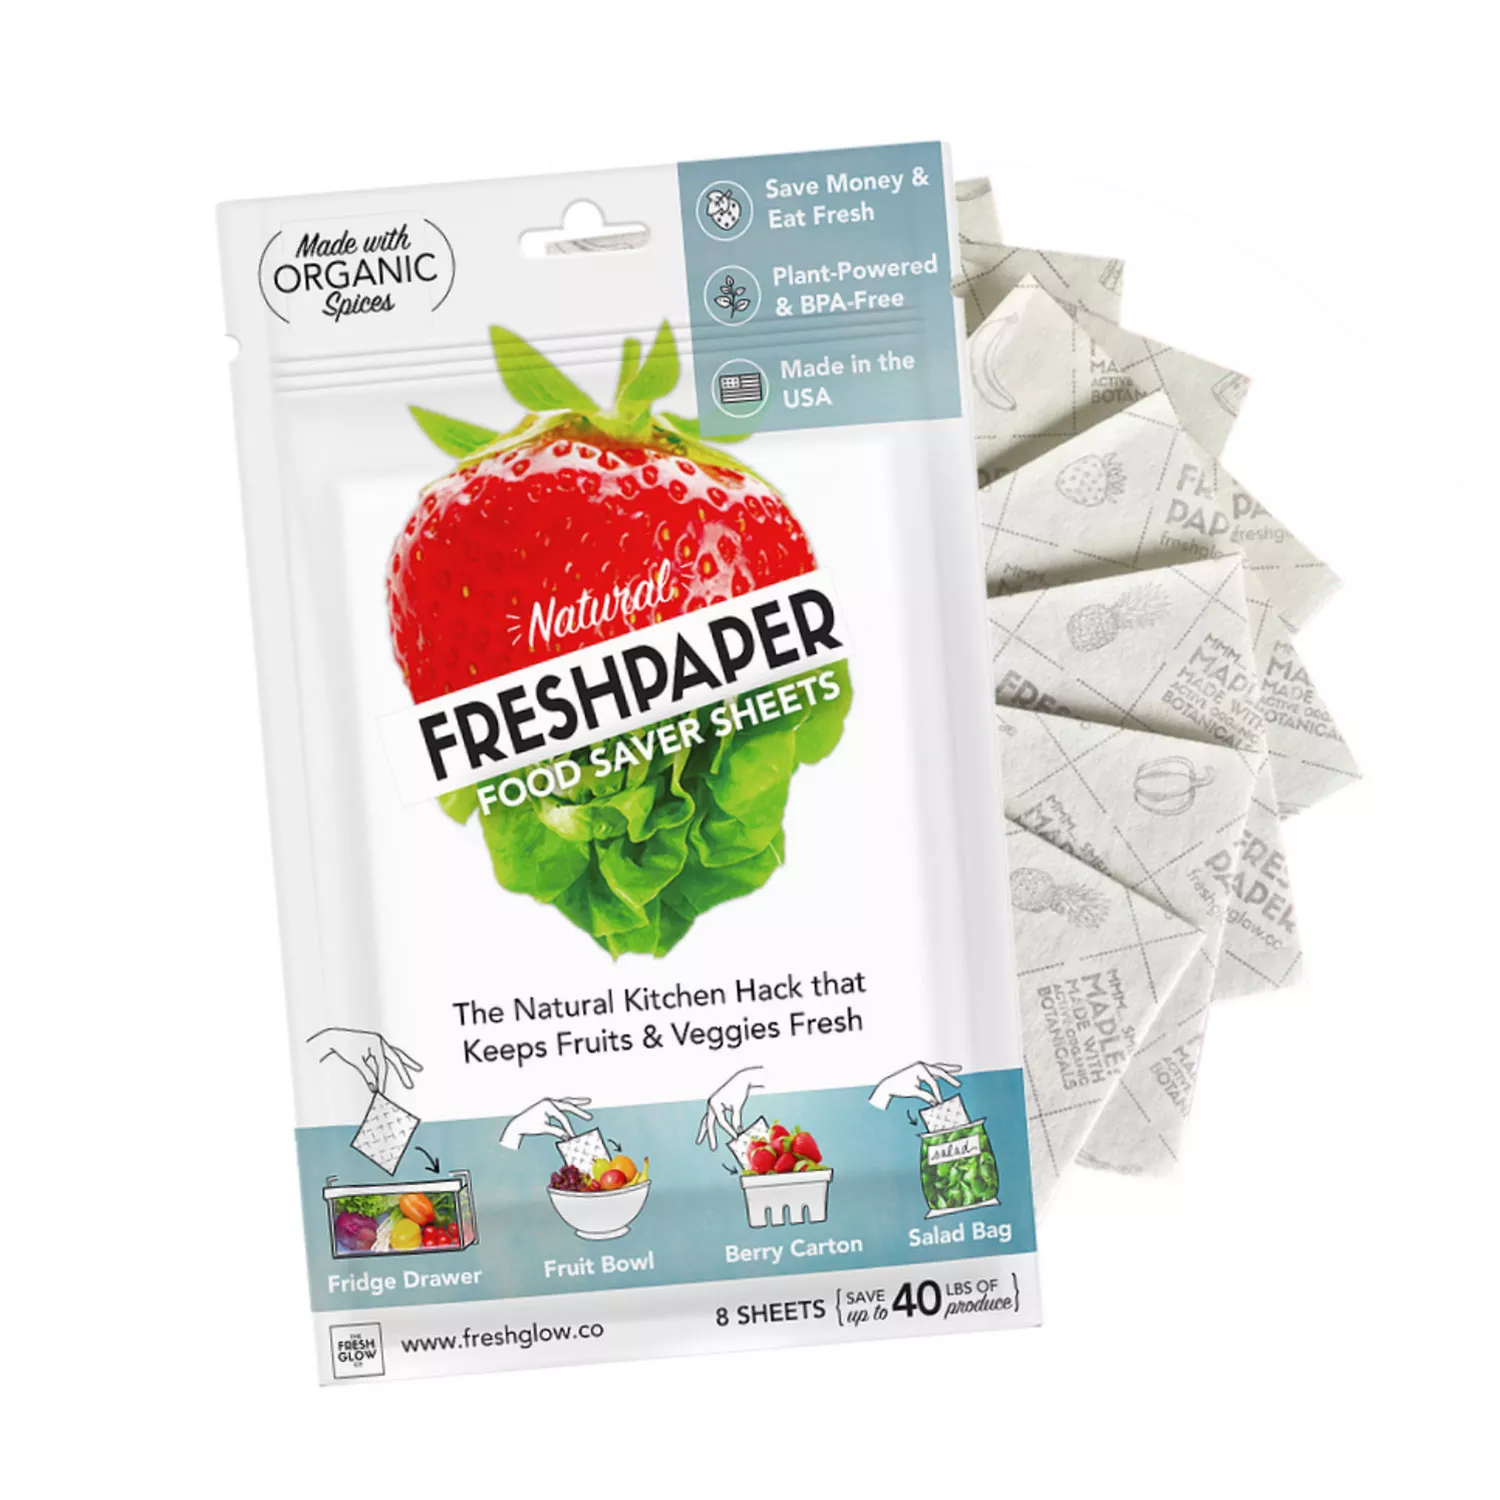 FreshPaper Produce Saver